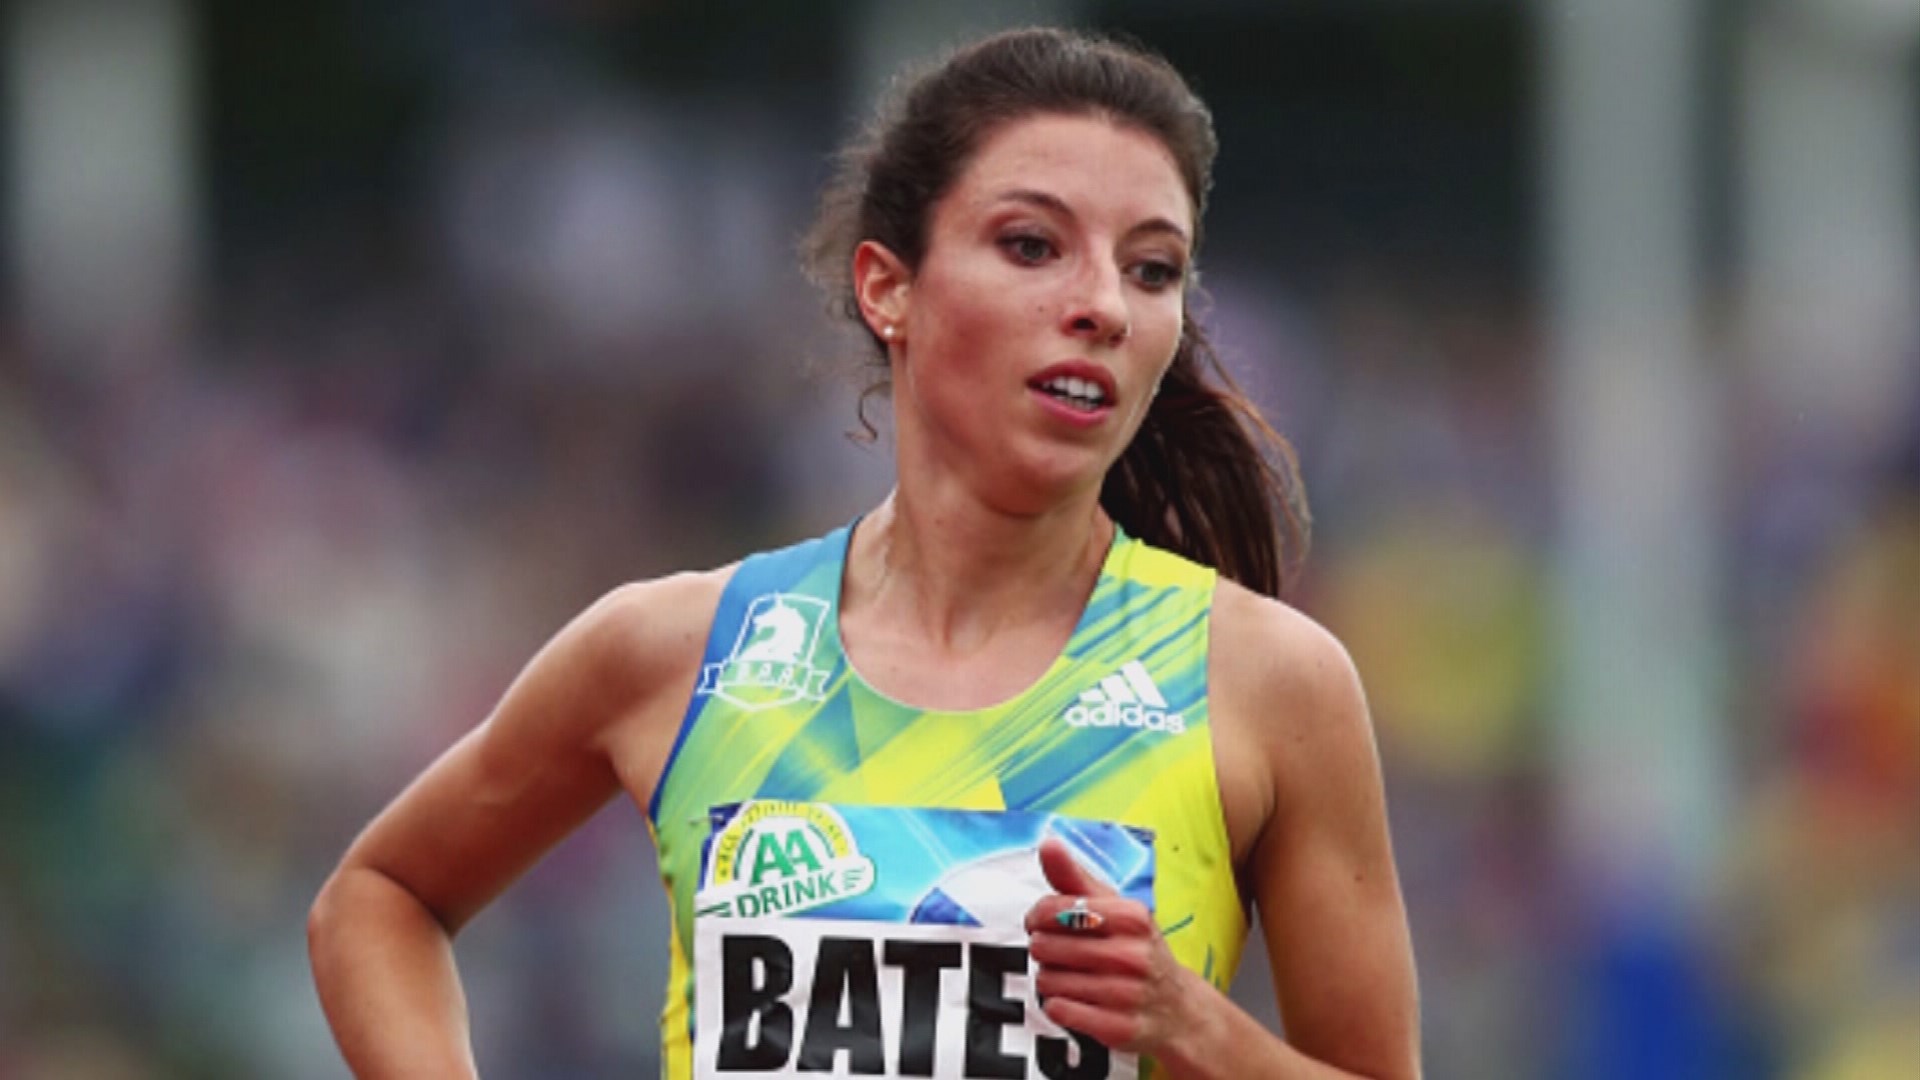 Emma Bates hits track at USATF Olympic Trials